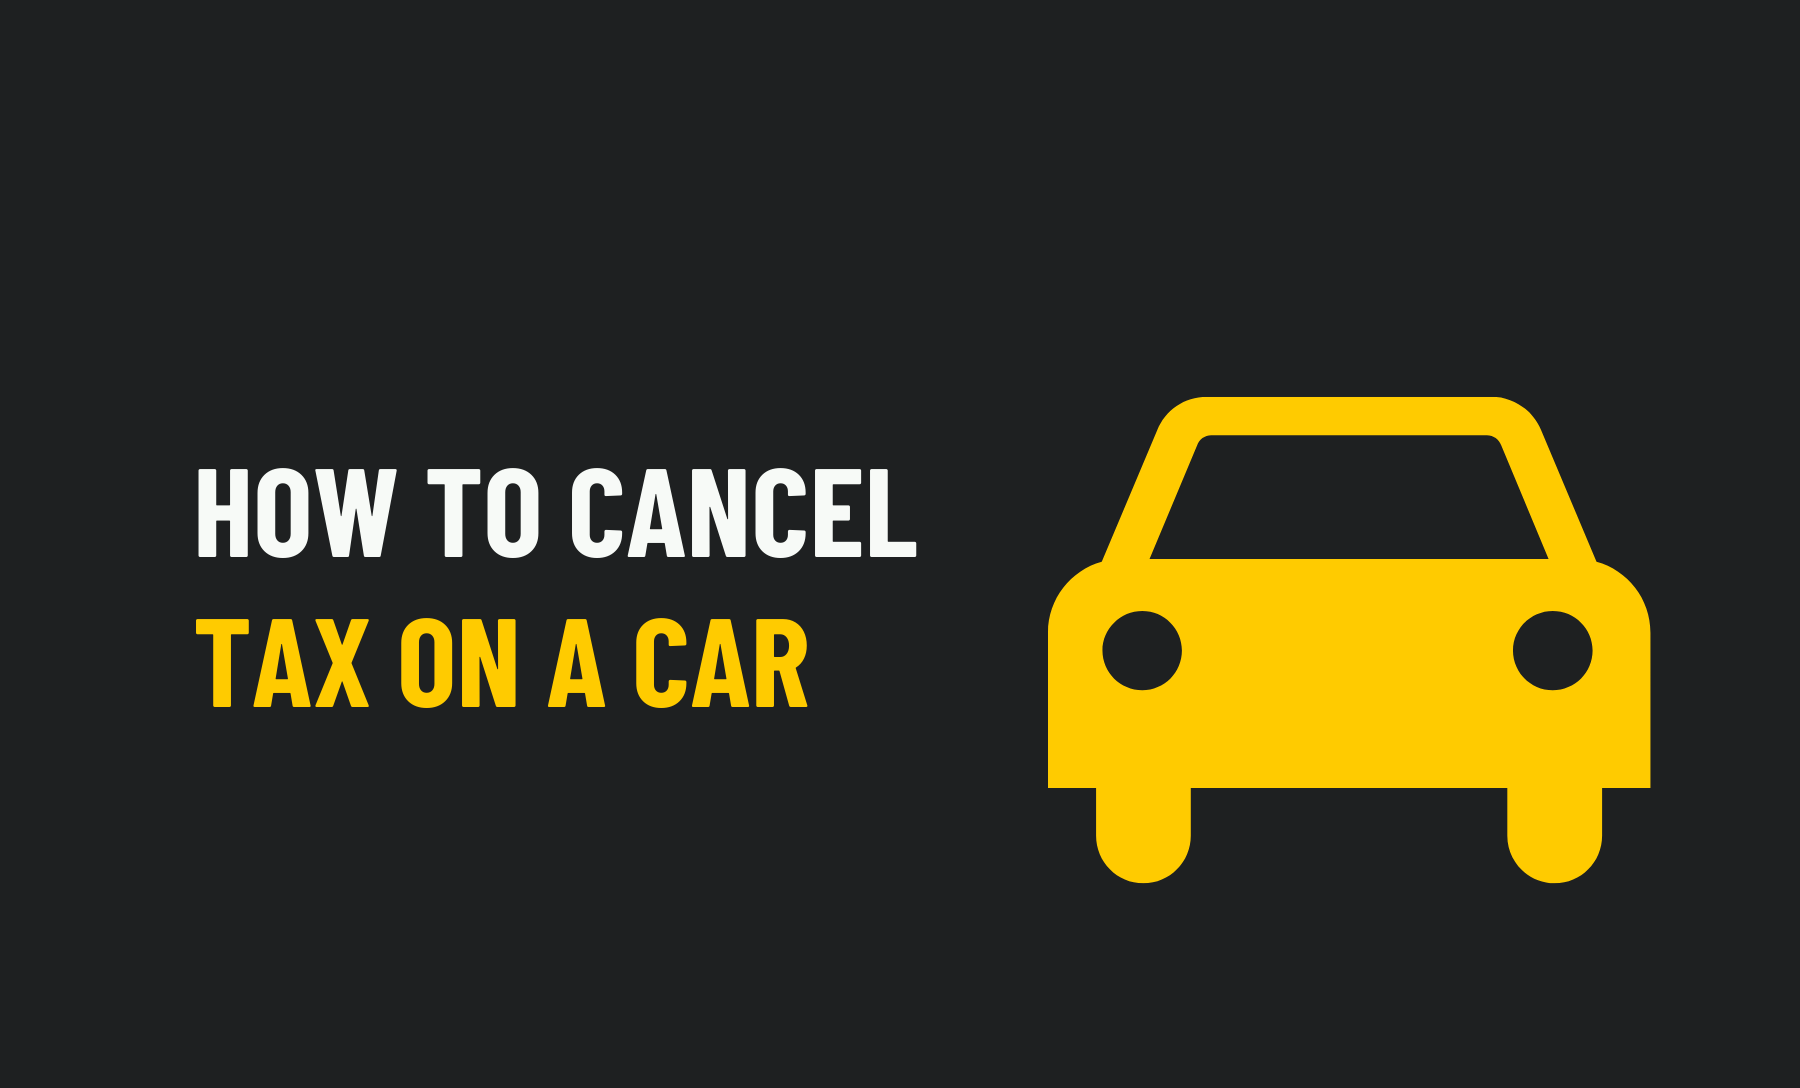 Cancel Tax on a Car